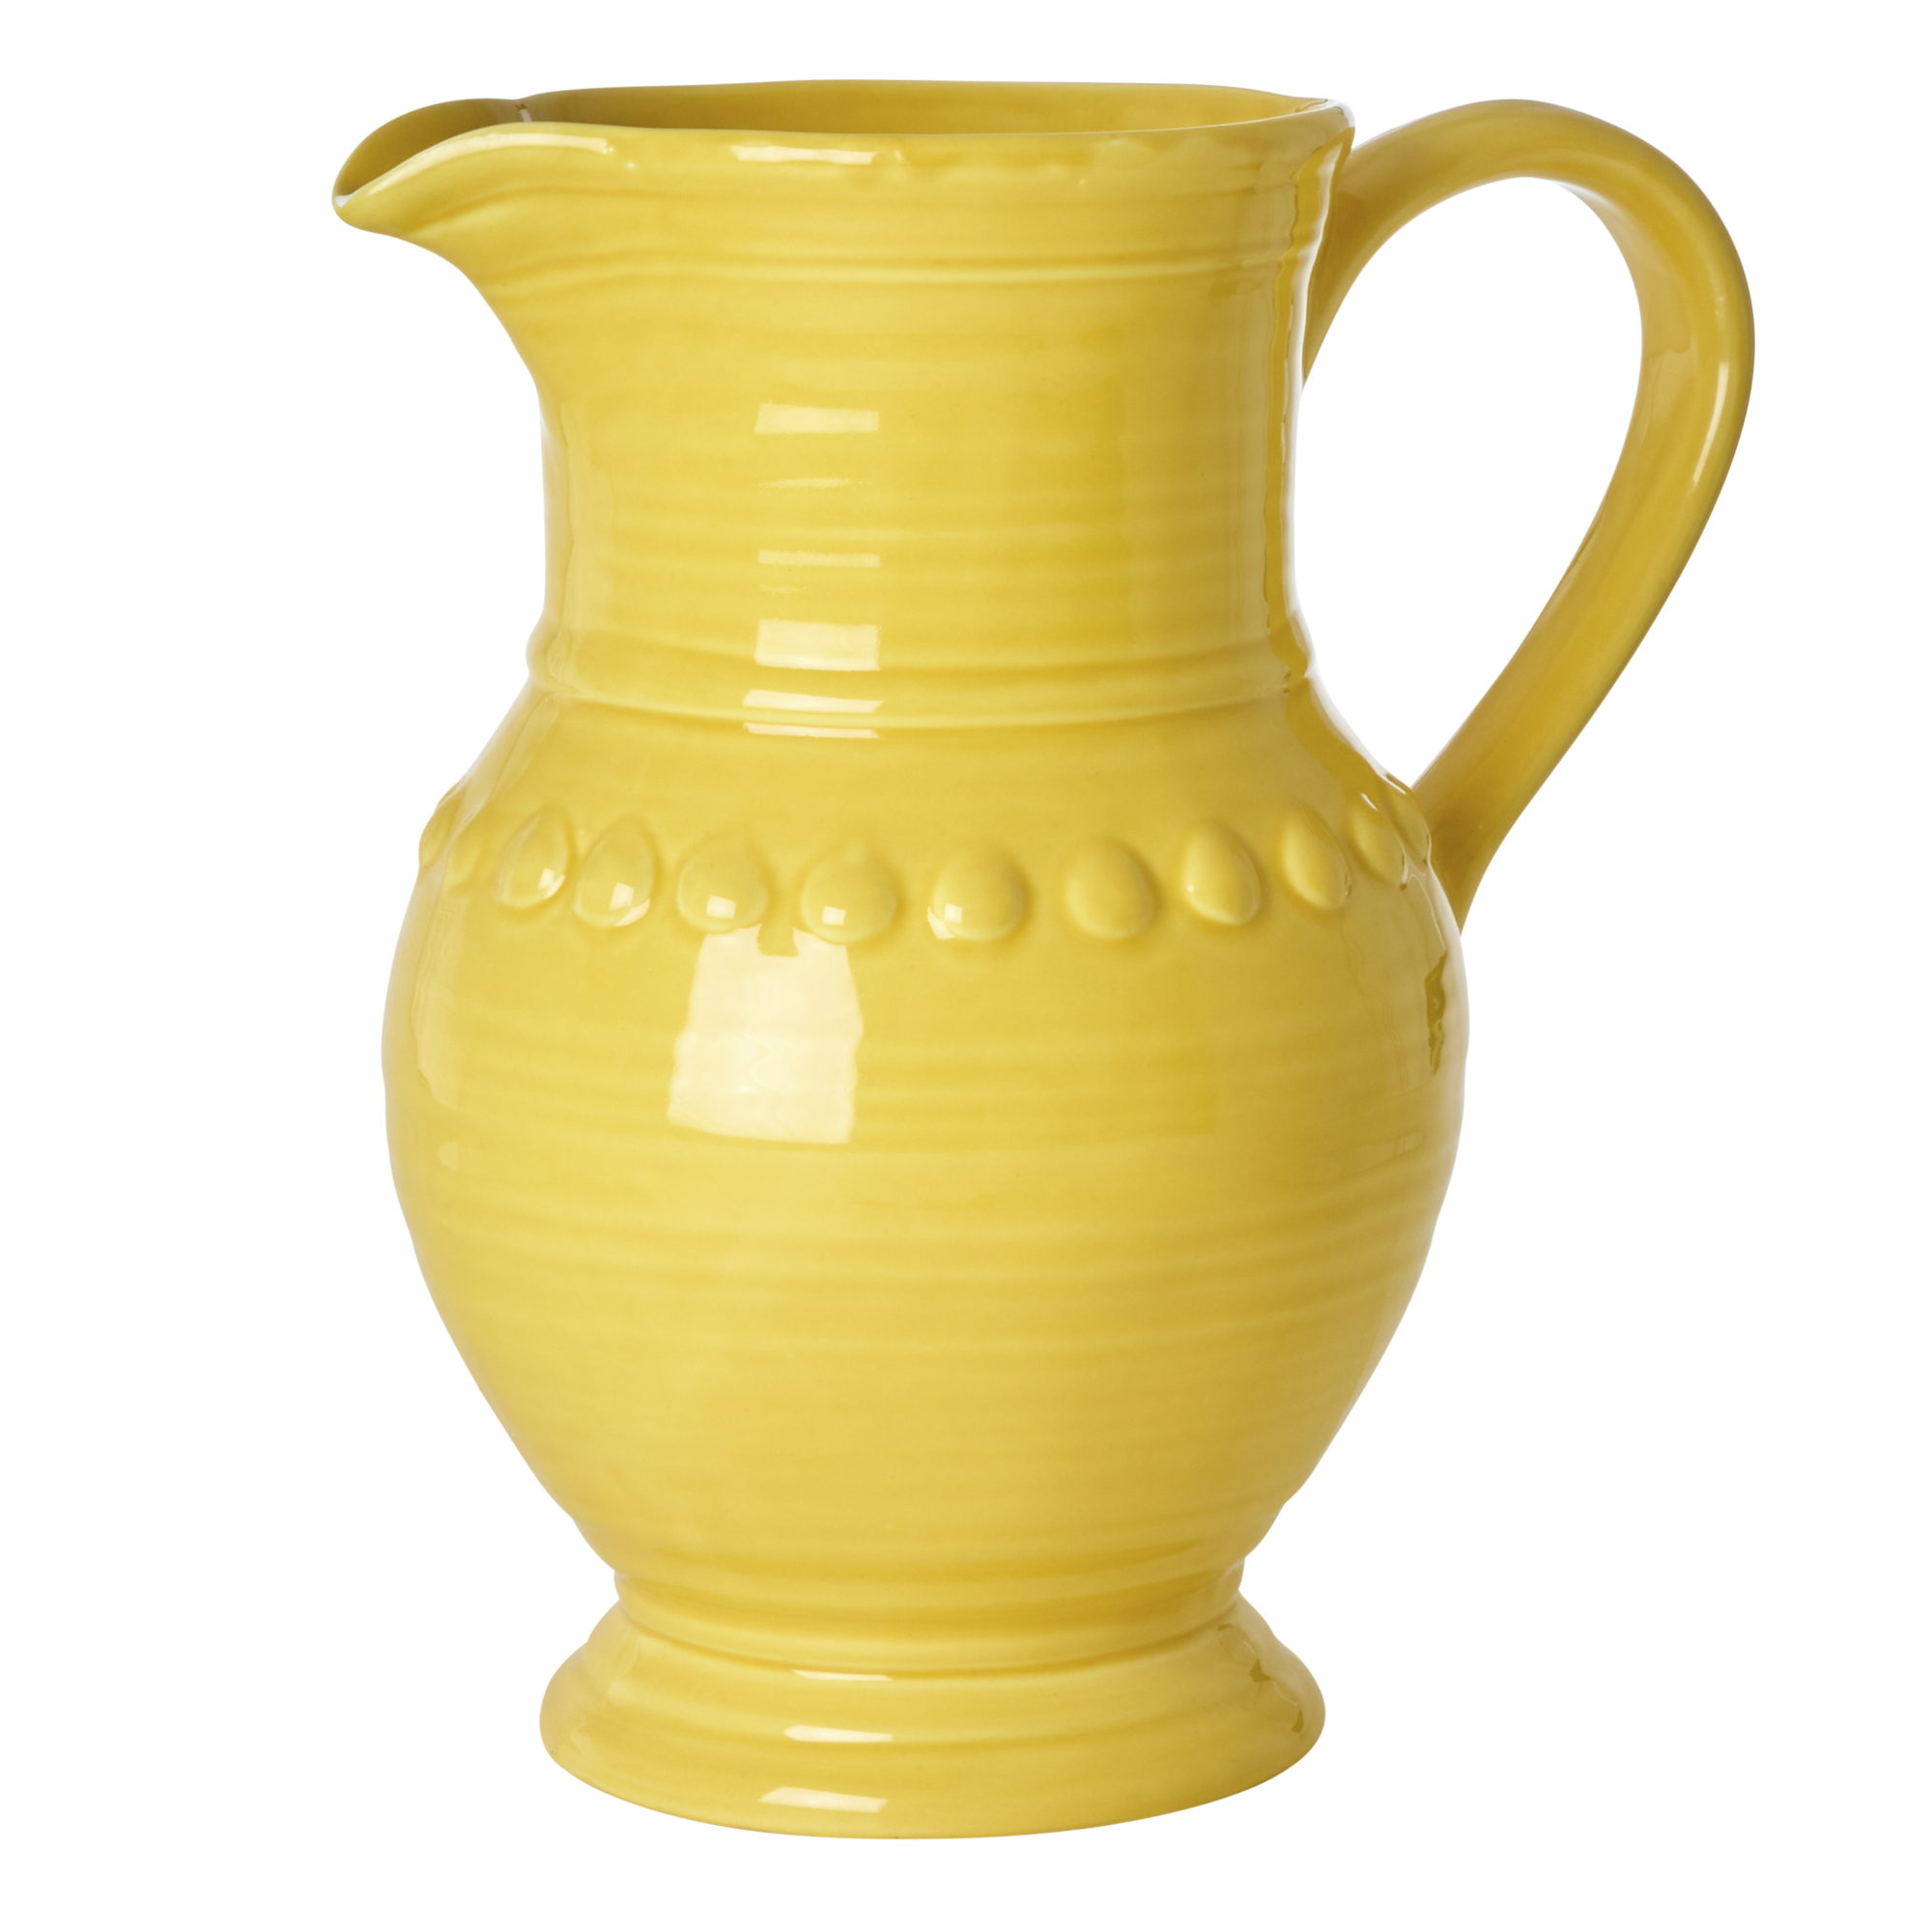 Rice - Ceramic Jug Extra Large - Yellow